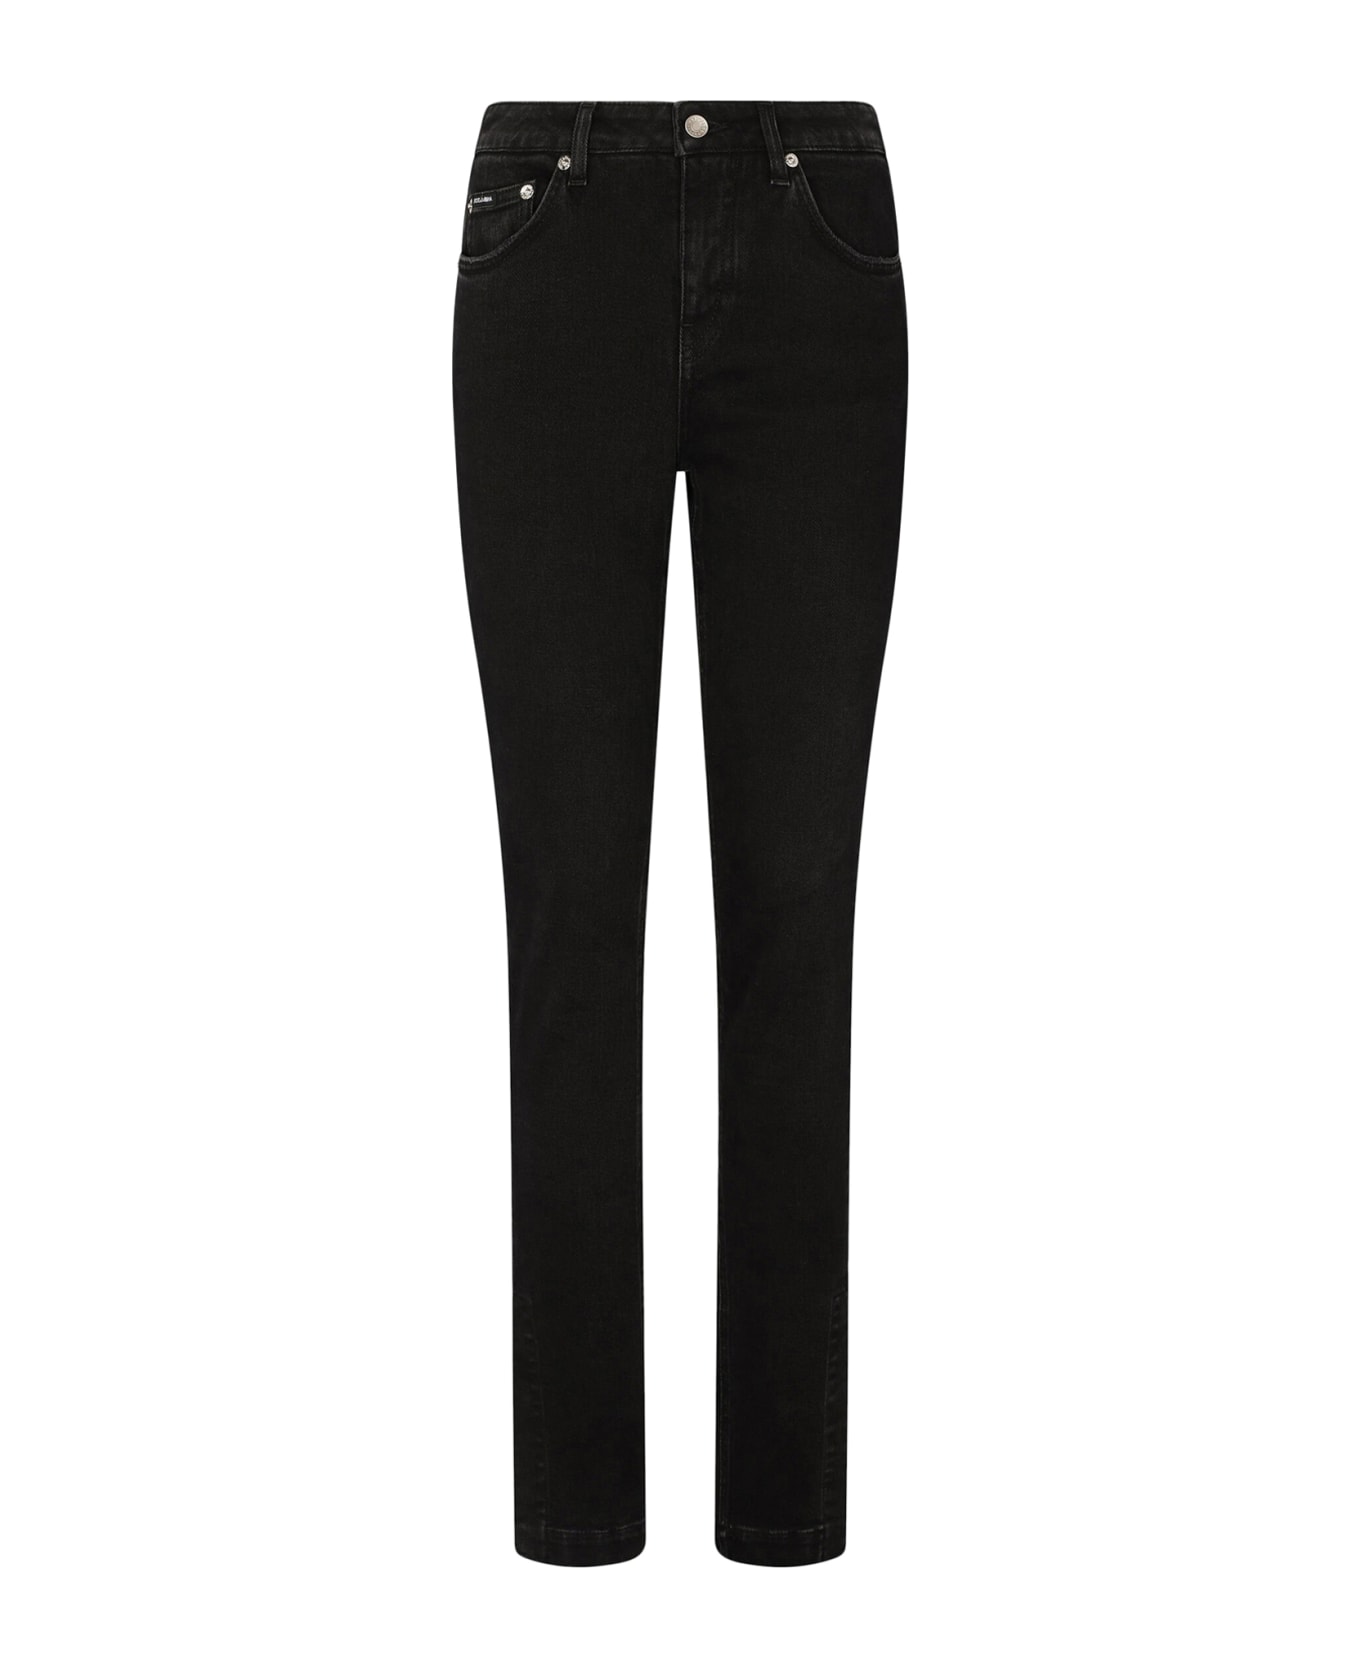 Dolce Alphabet & Gabbana 5 Pockets Pants - Variante Abbinata